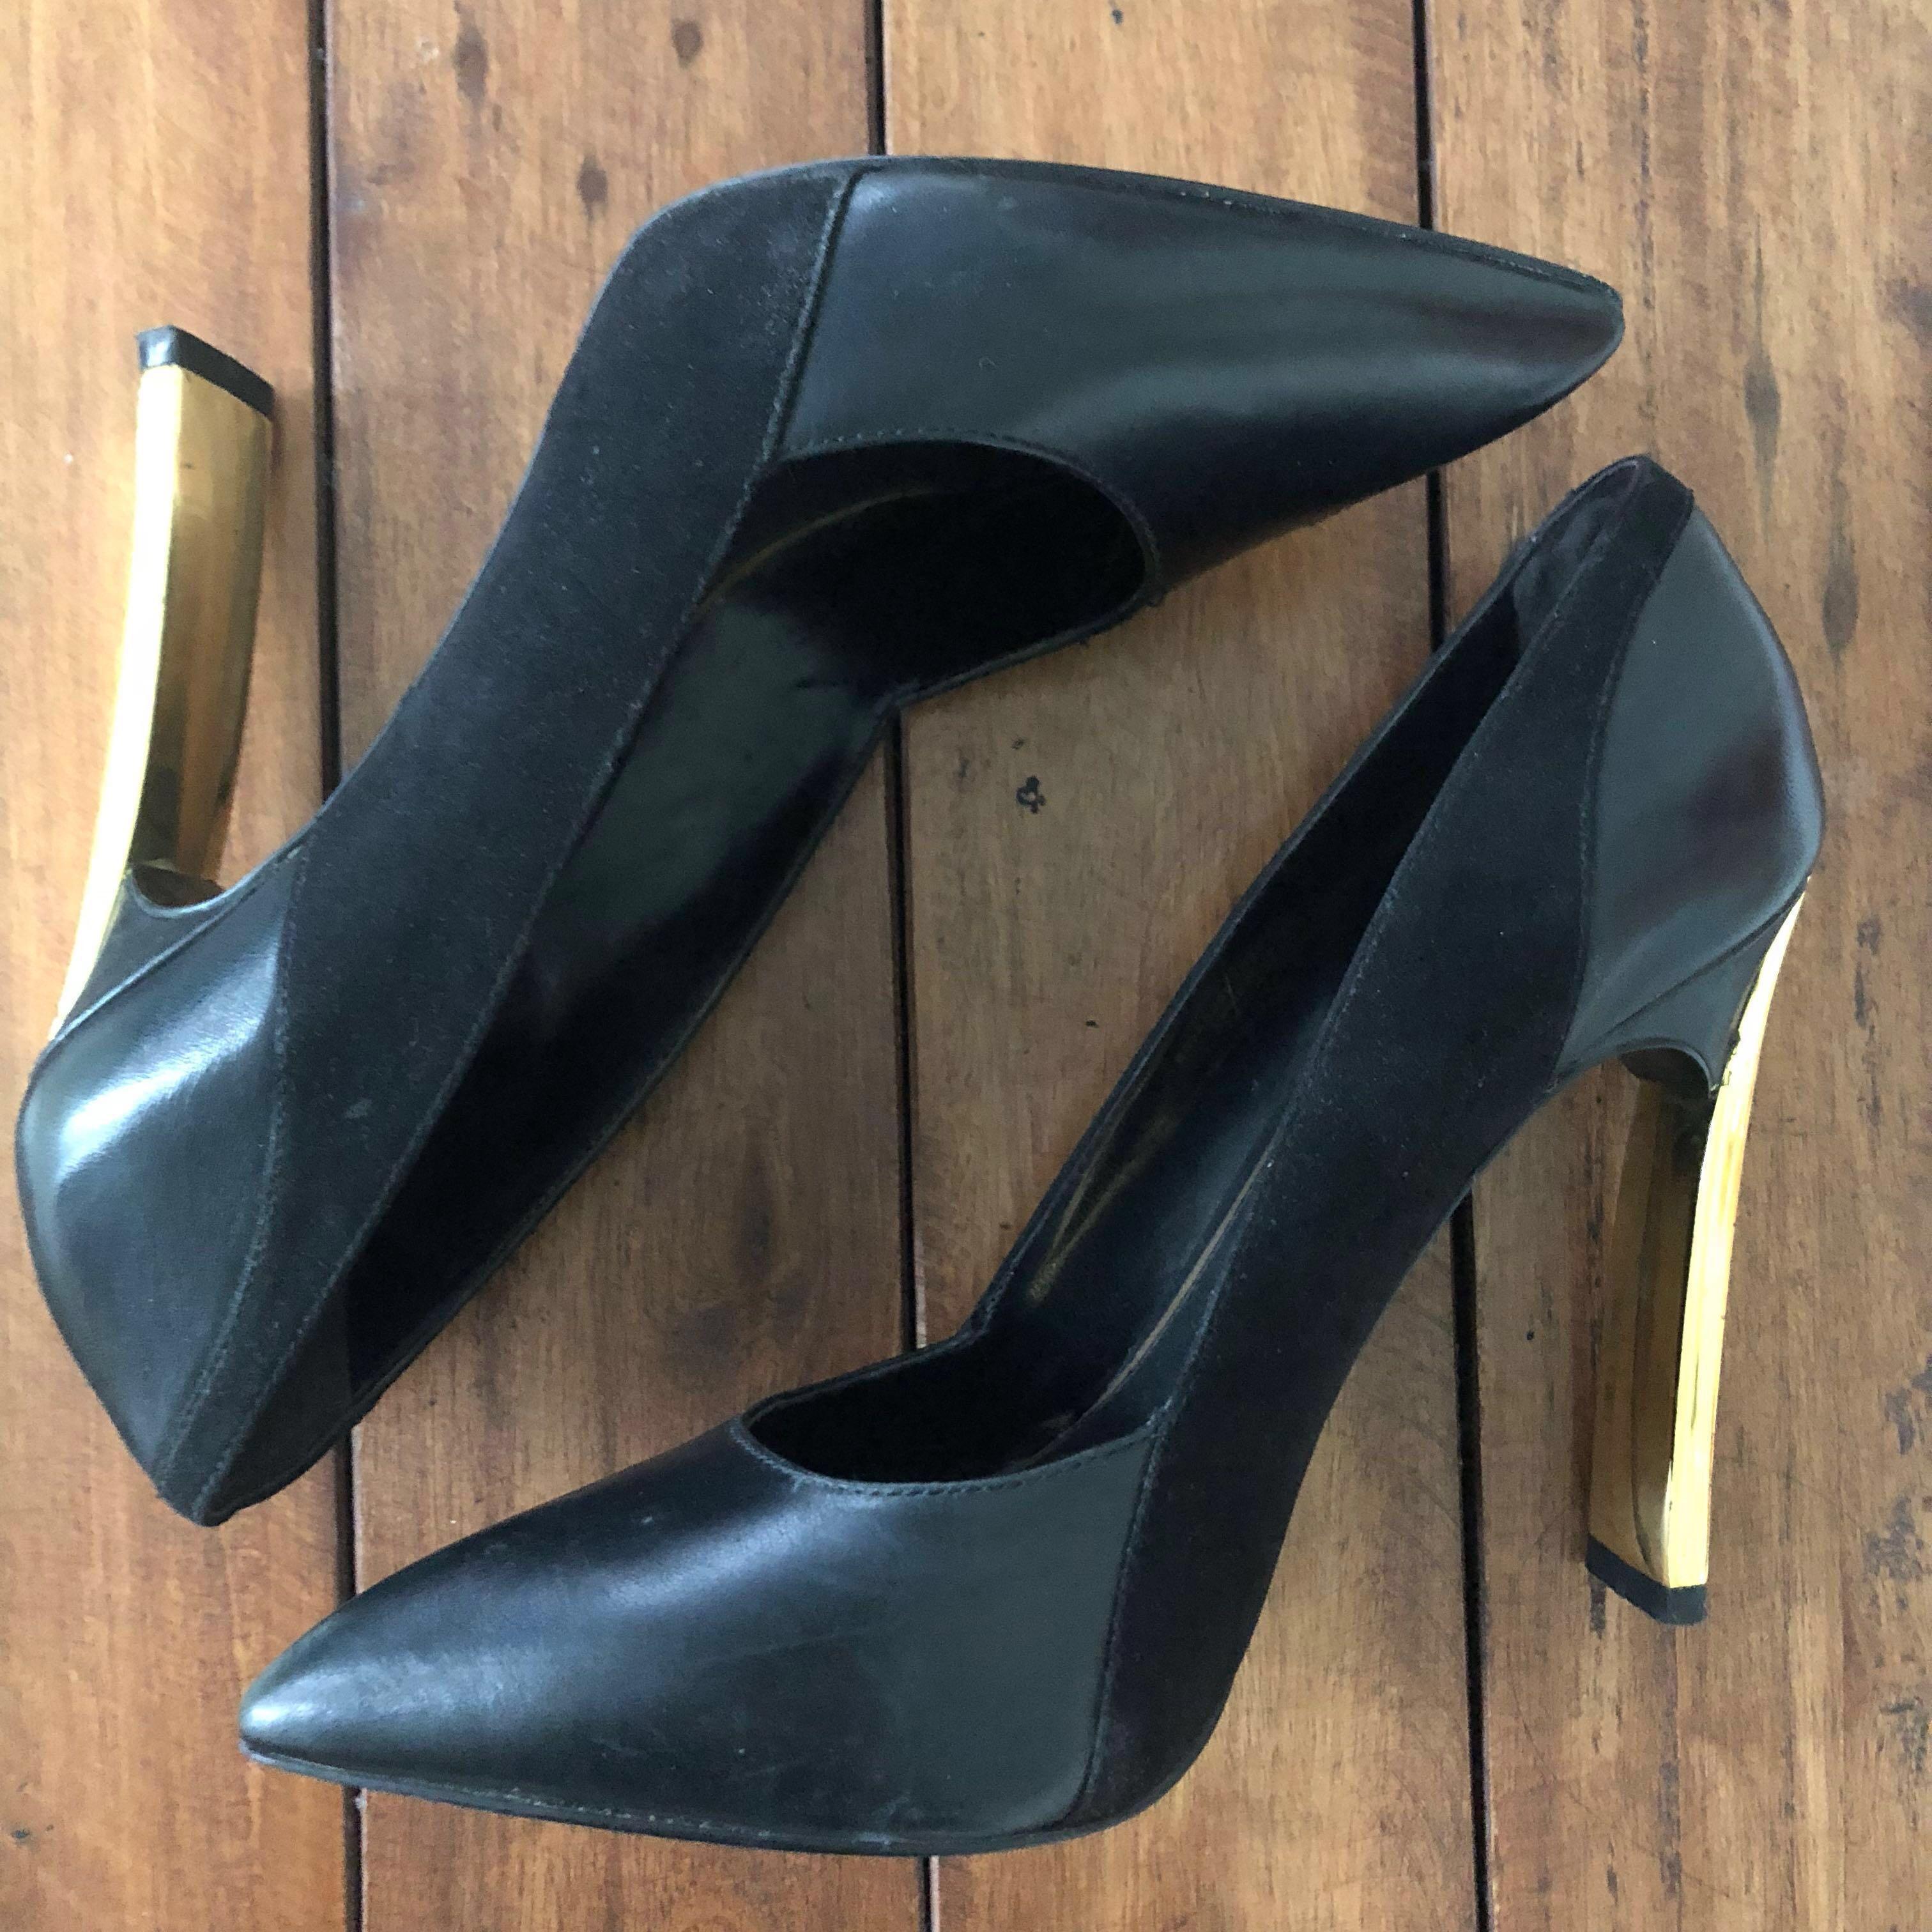 black pumps with gold heels